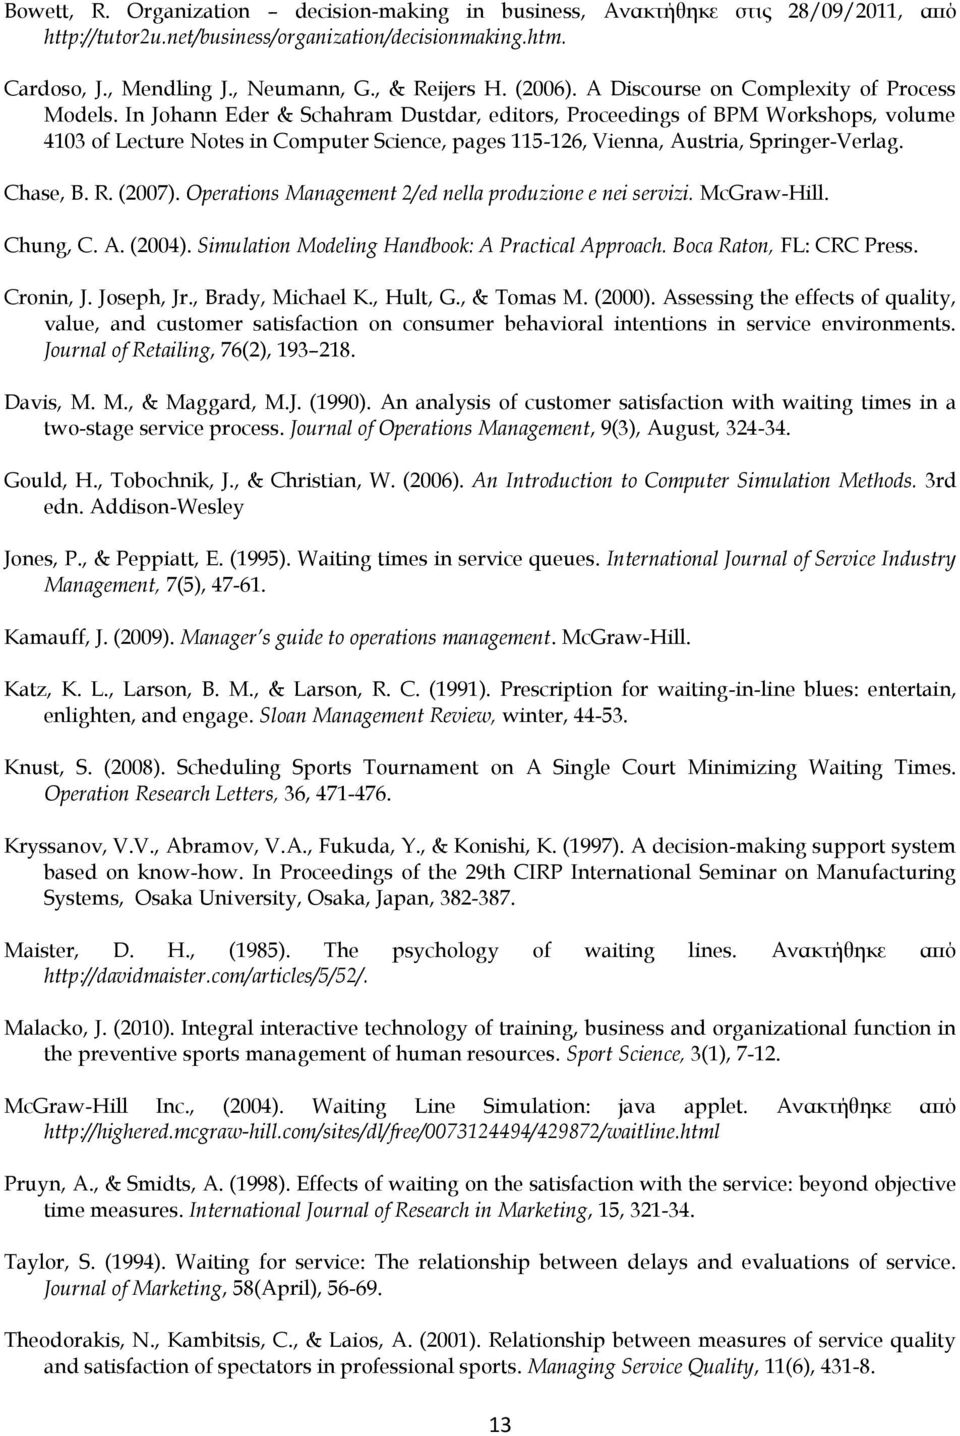 In Johann Eder & Schahram Dustdar, editors, Proceedings of BPM Workshops, volume 4103 of Lecture Notes in Computer Science, pages 115-126, Vienna, Austria, Springer-Verlag. Chase, B. R. (2007).